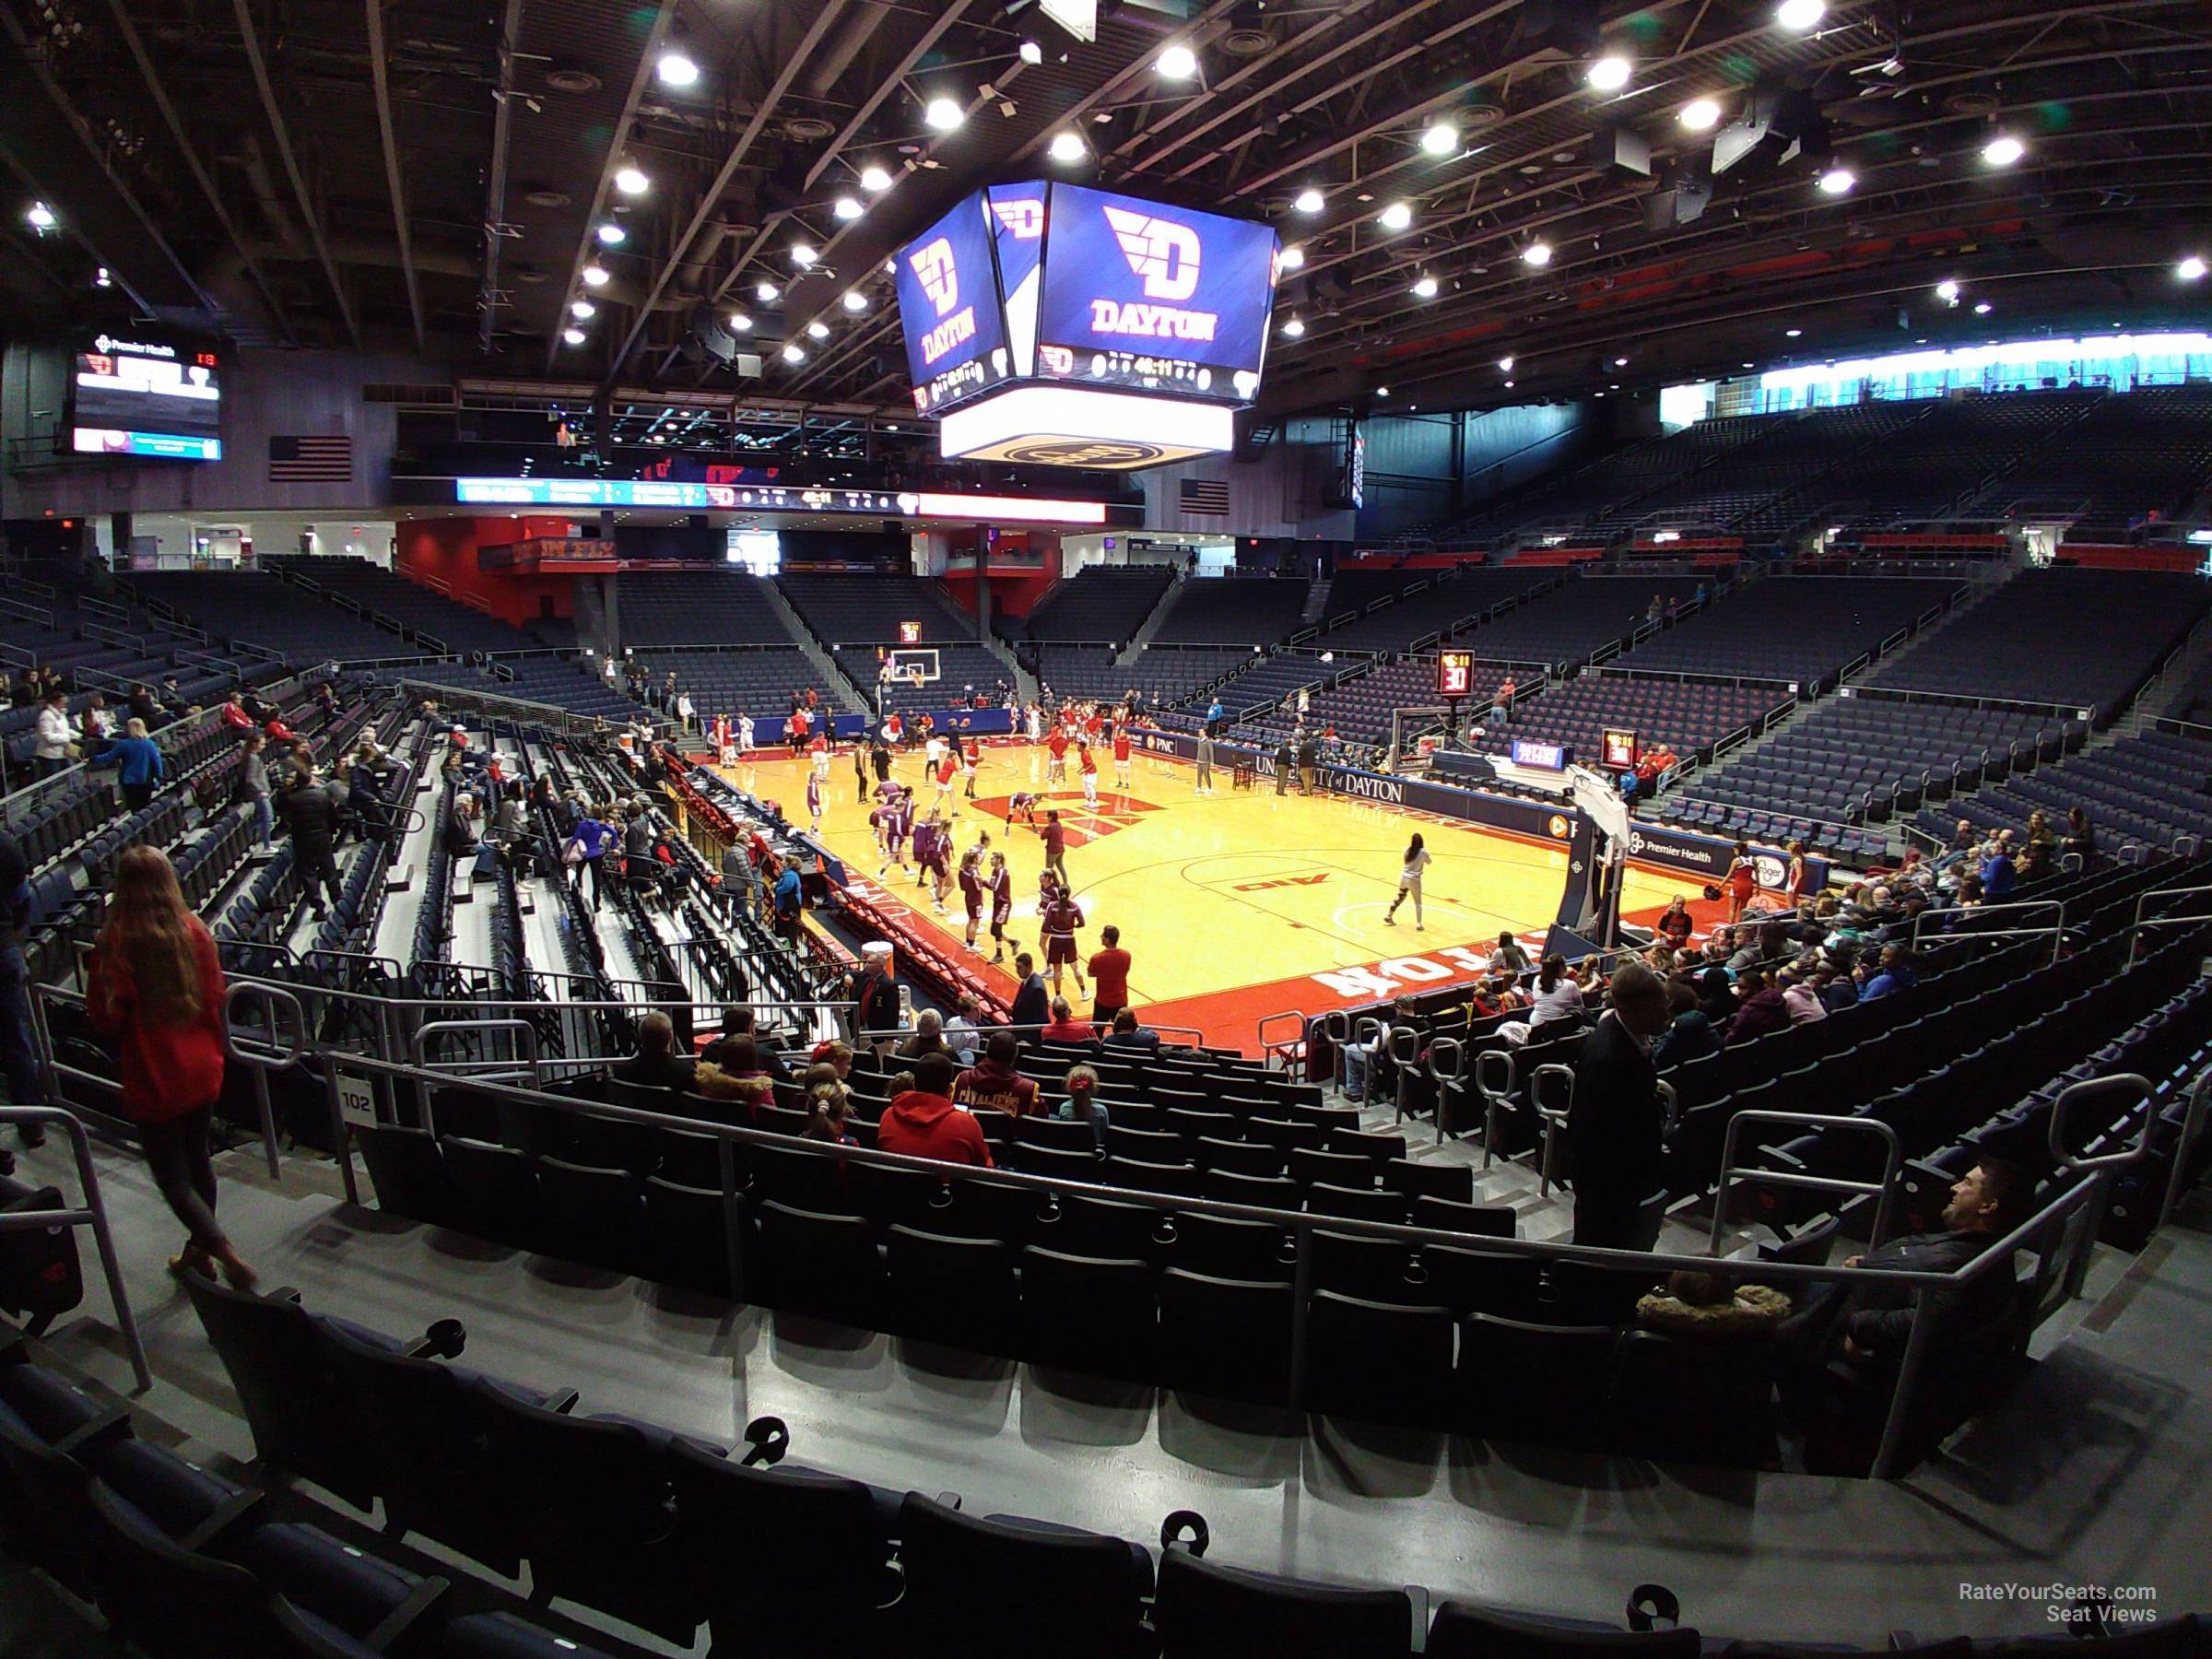 Section 109 at University of Dayton Arena 